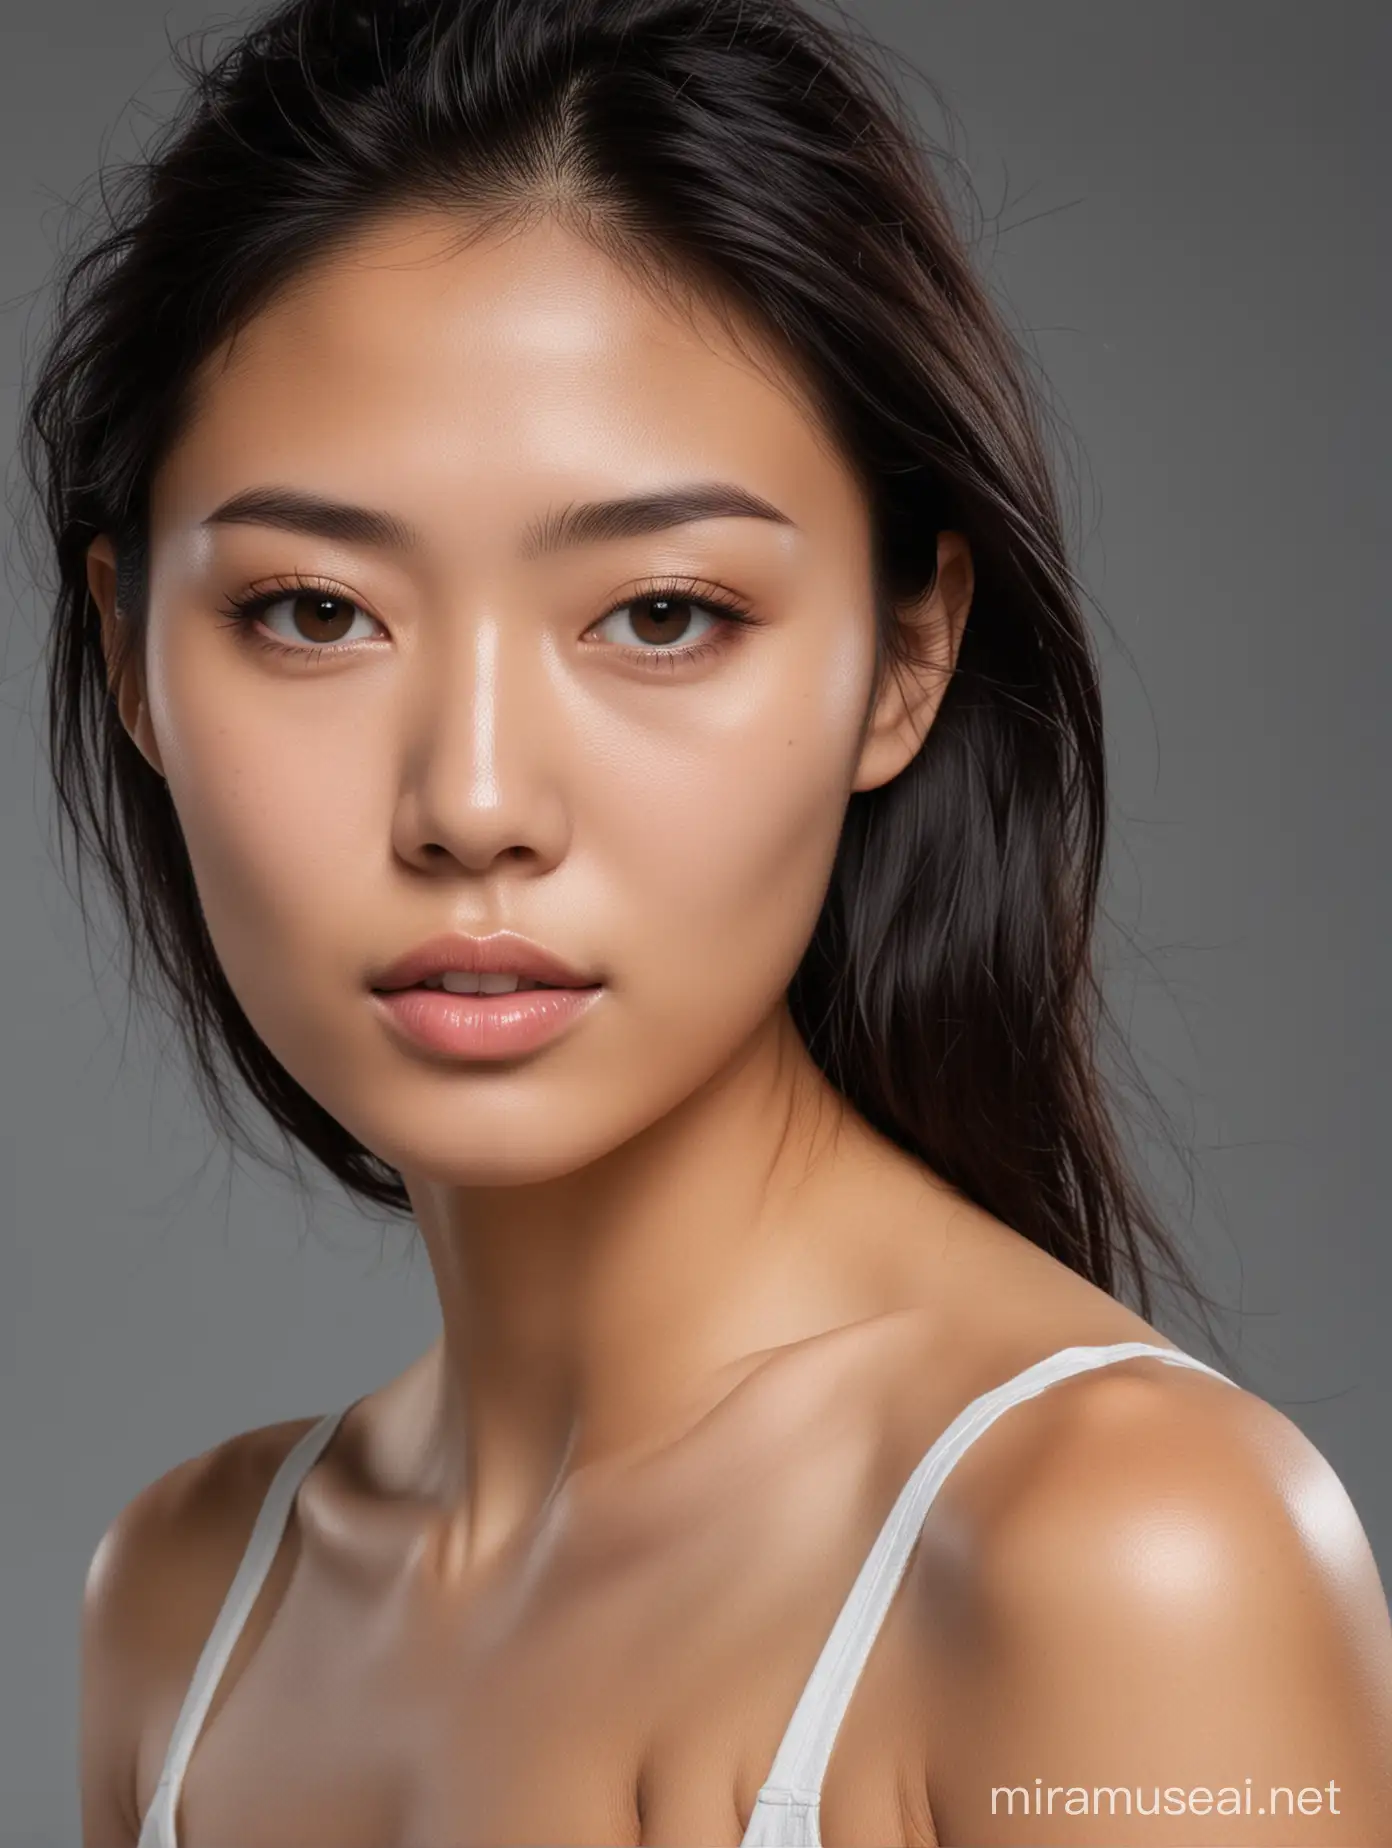 Asian Woman with Natural Dark Hair No Makeup Portrait